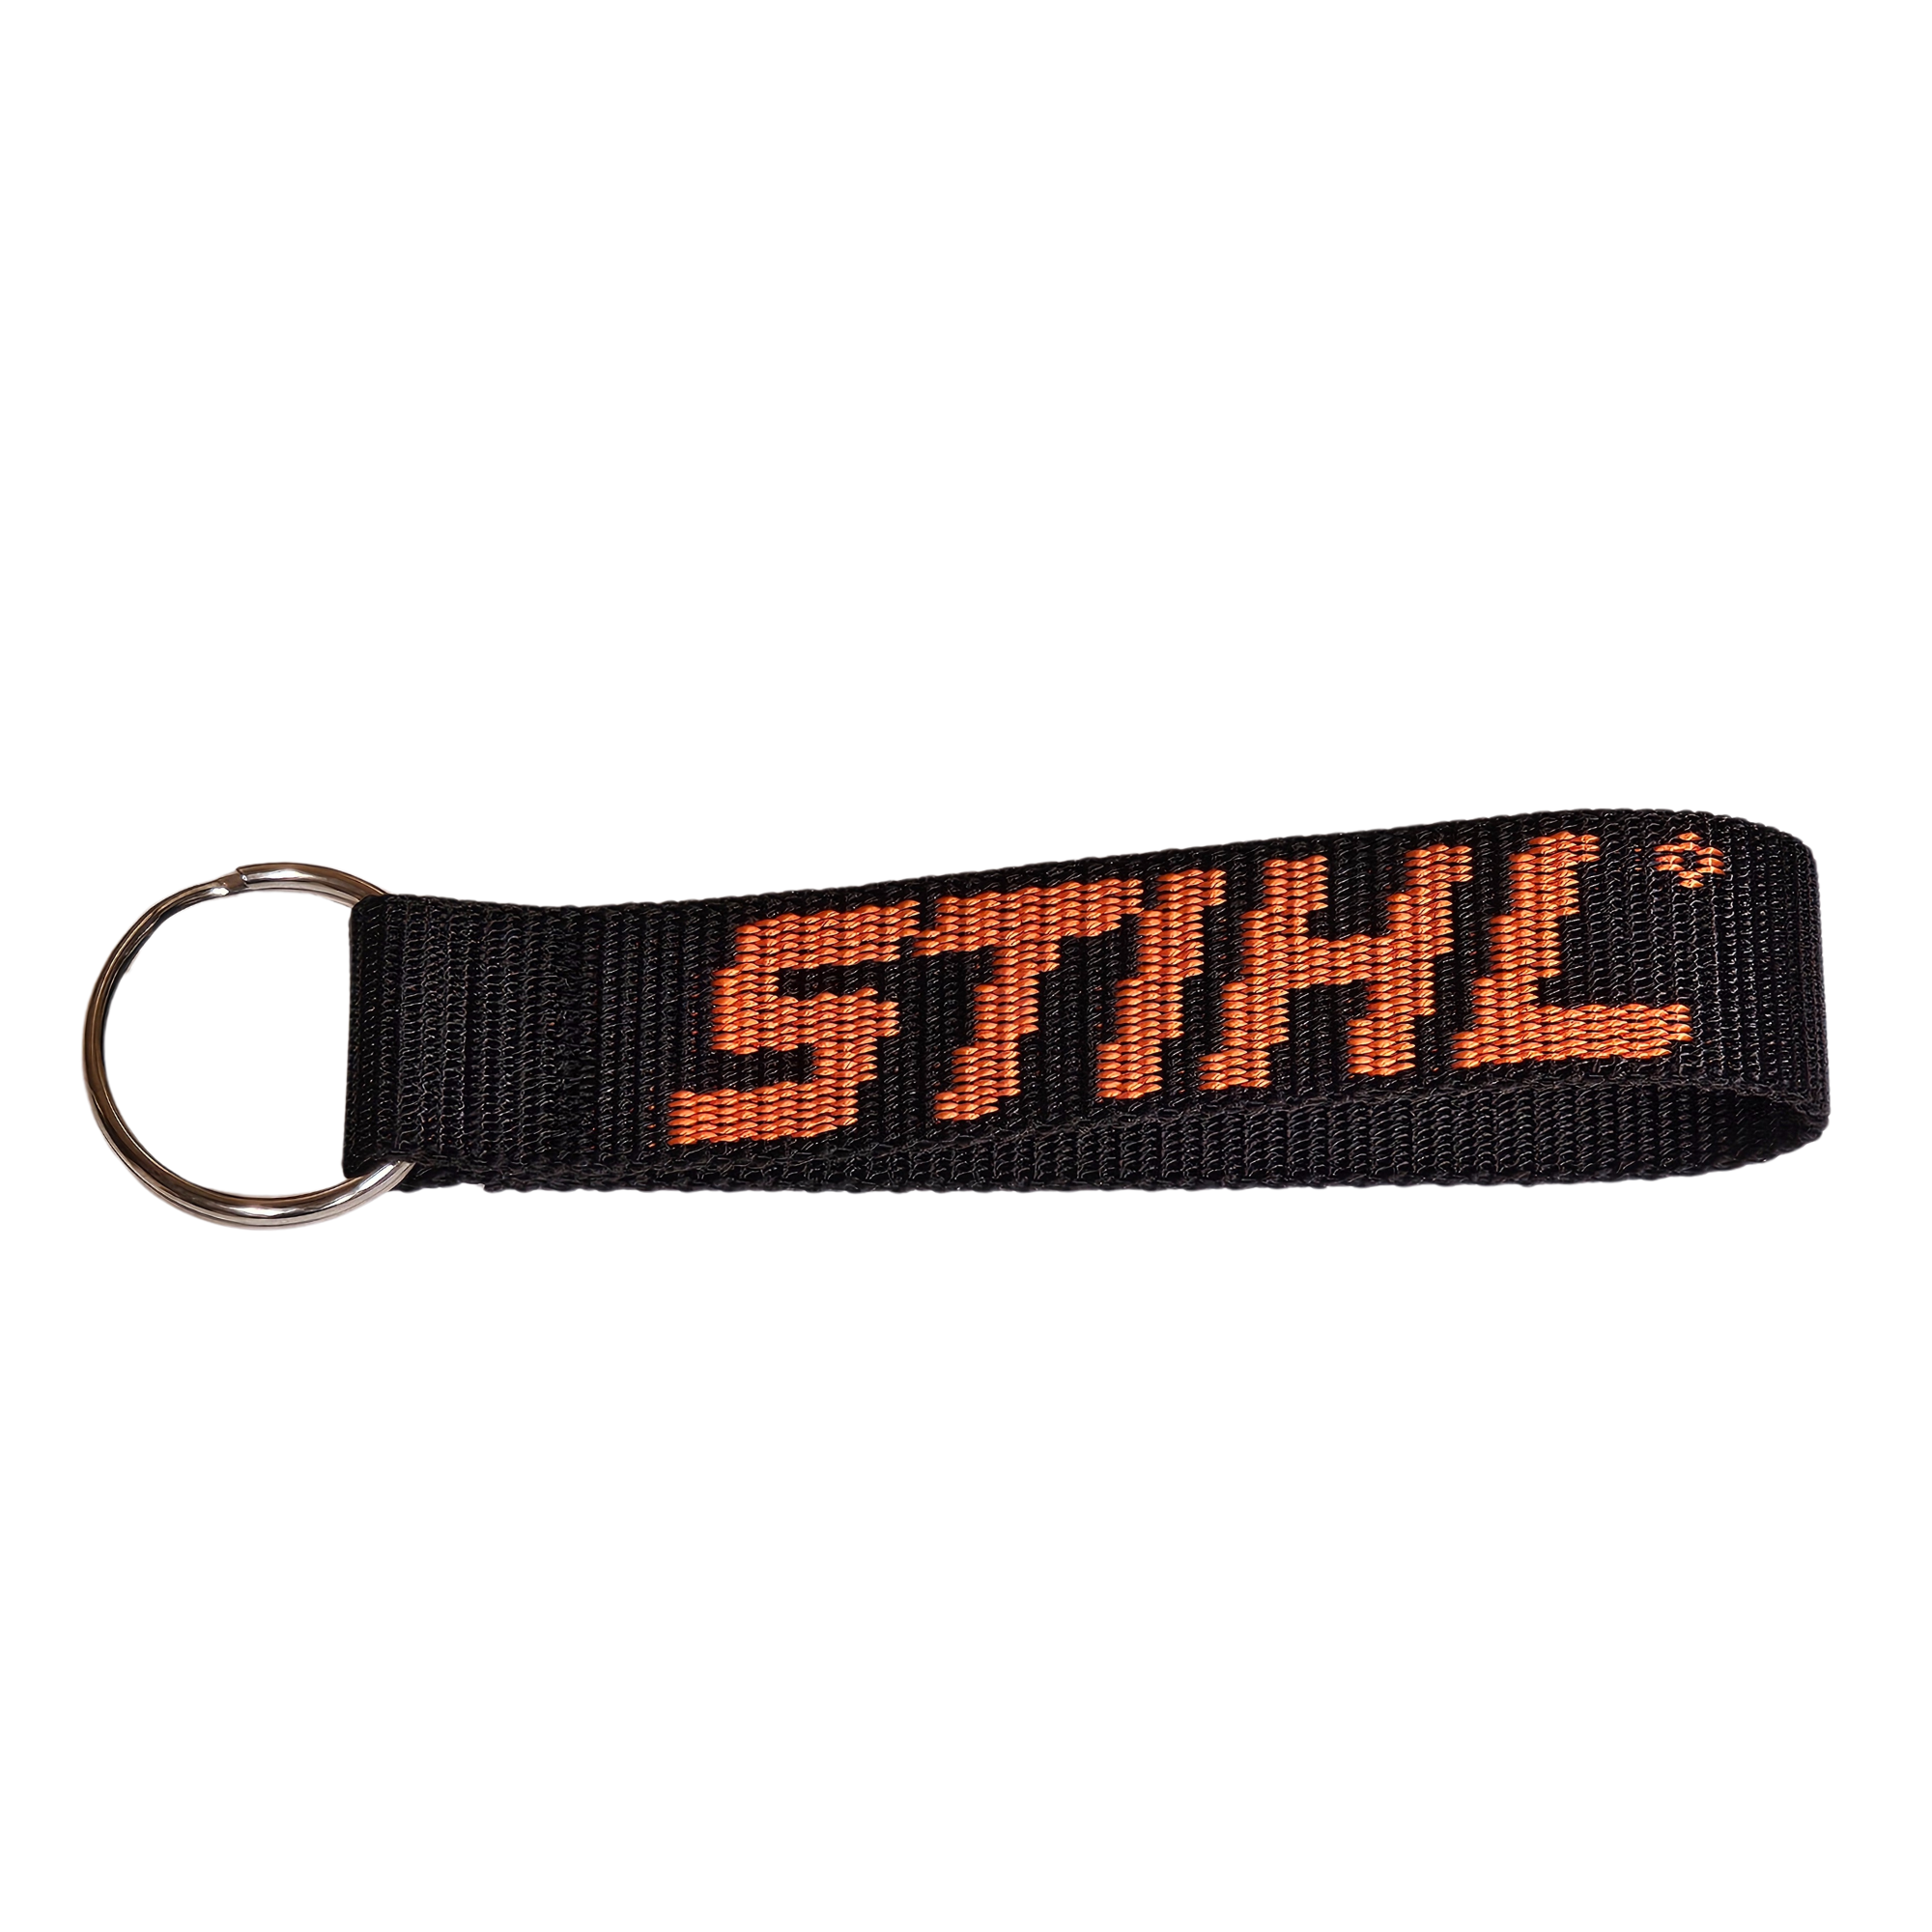 Stihl 6" Strap with Key Ring | 0463 901 0690